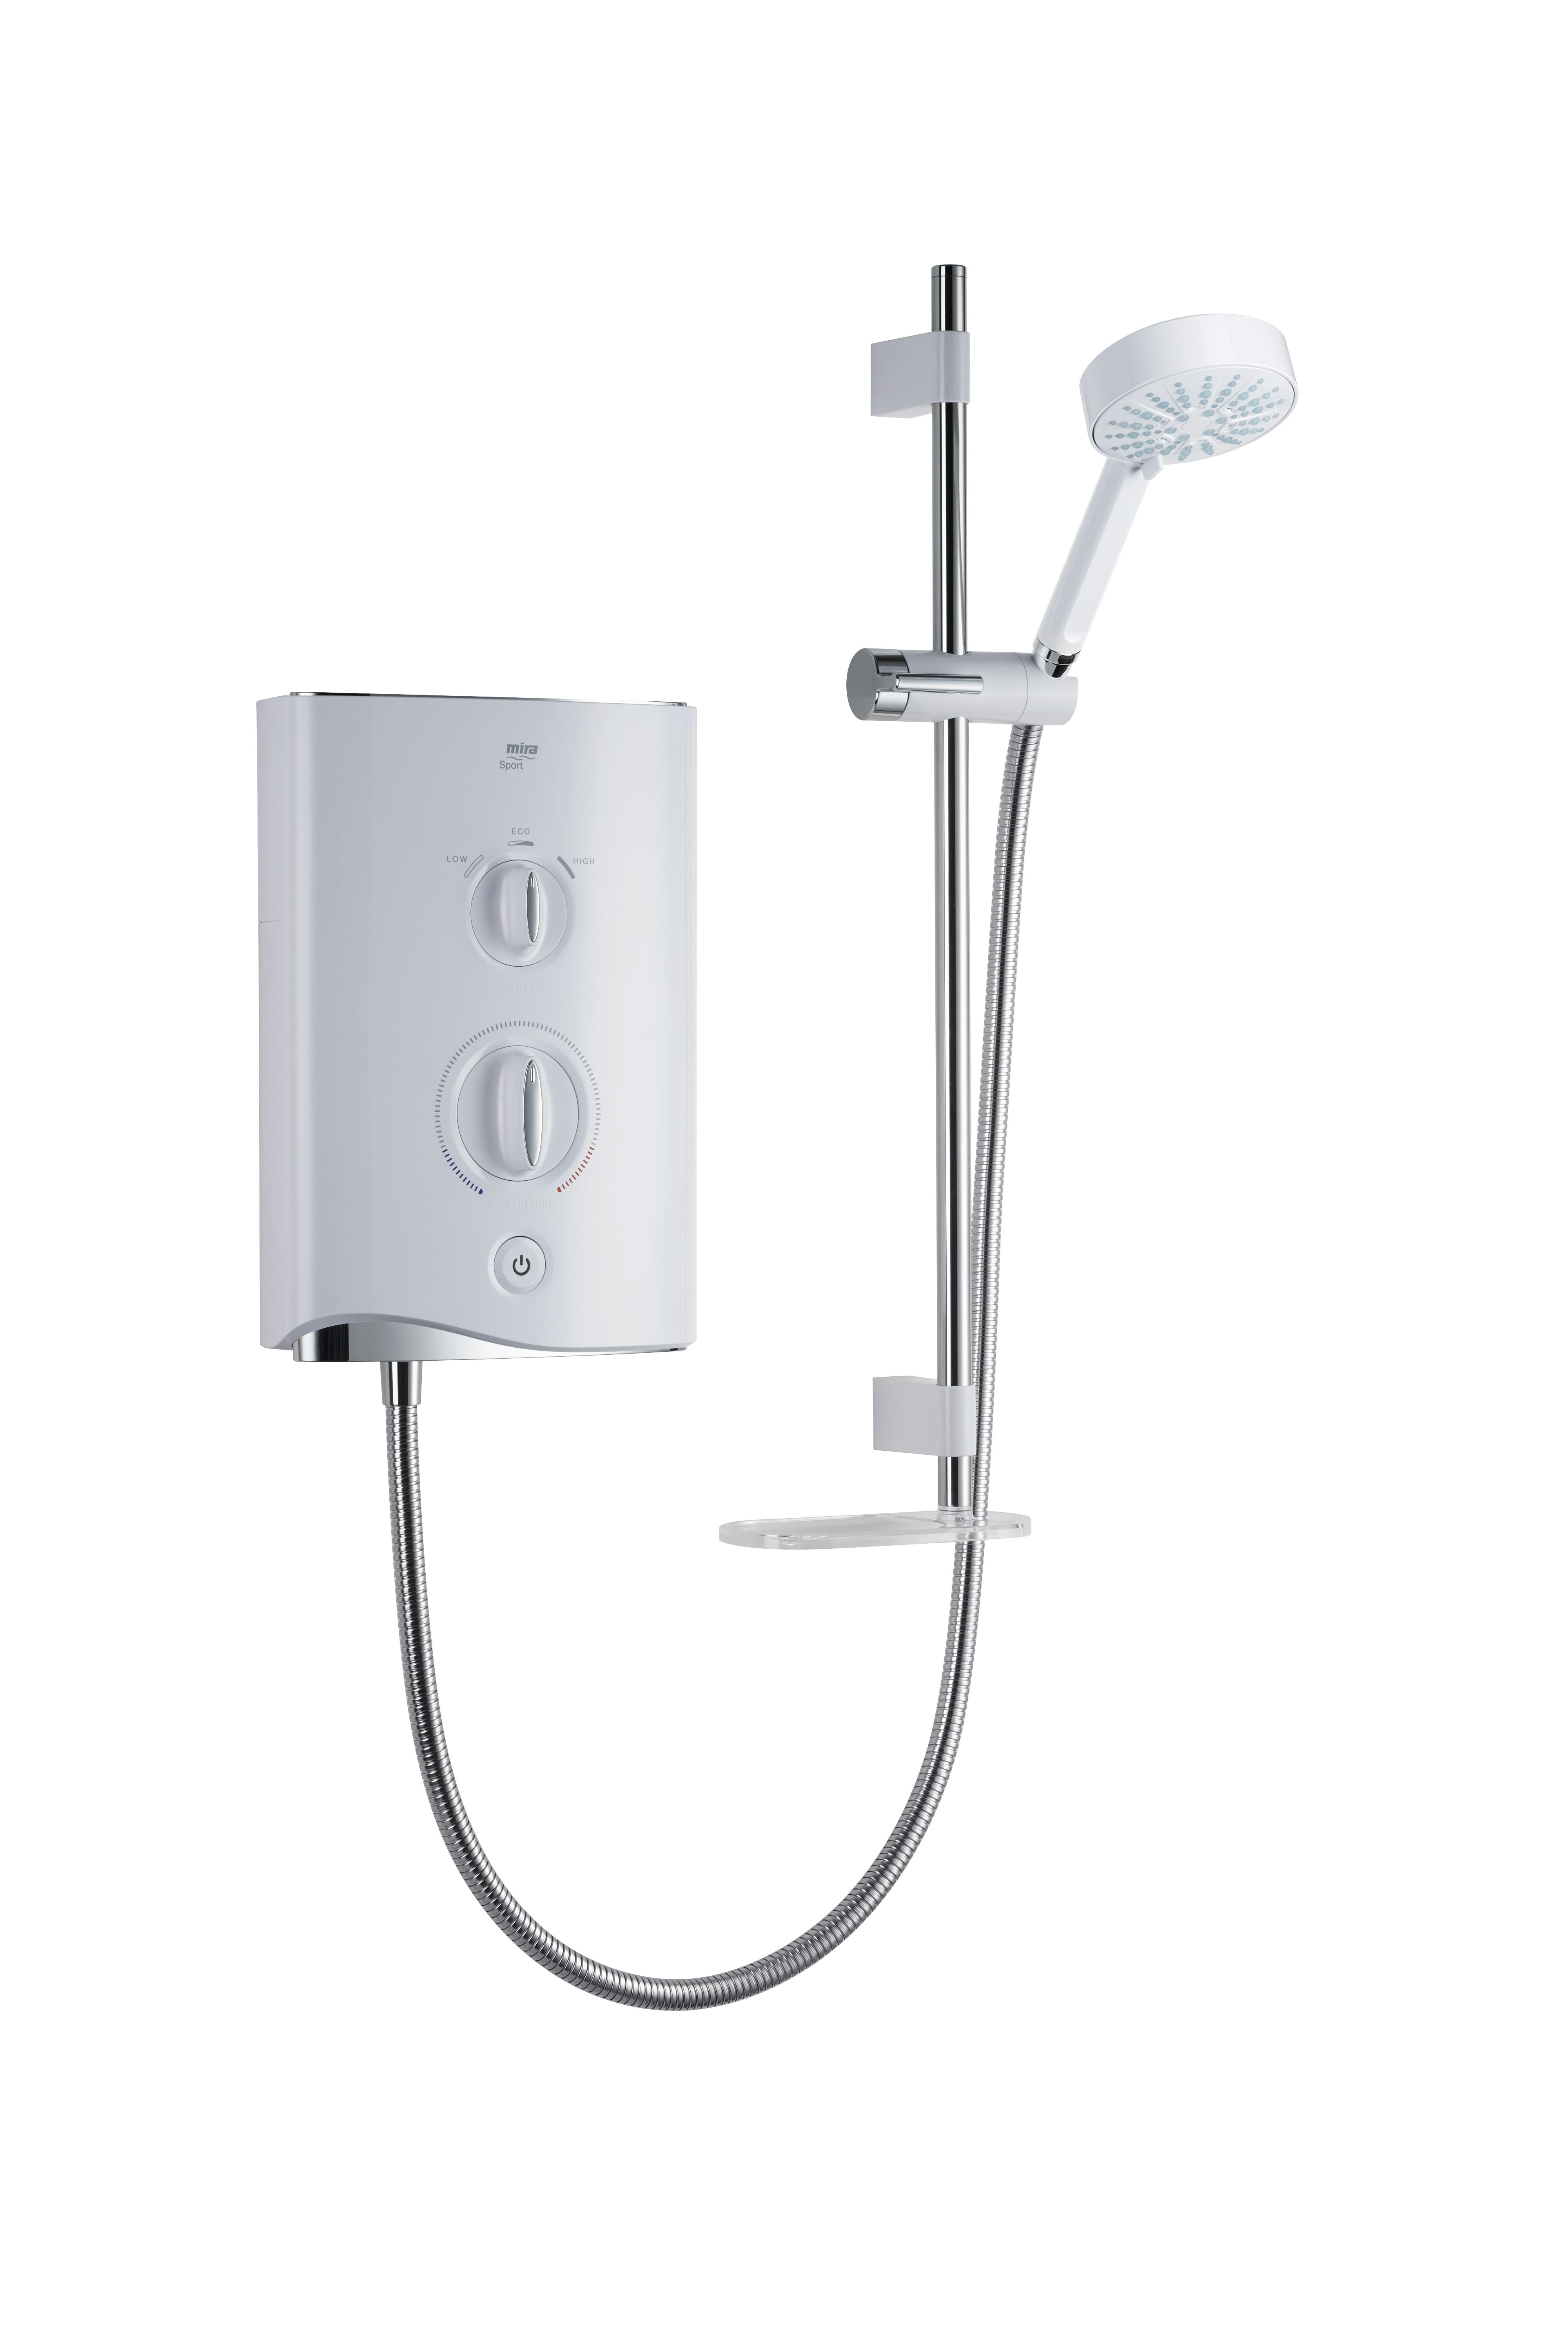 Mira Sport Multi-Fit™ electric shower